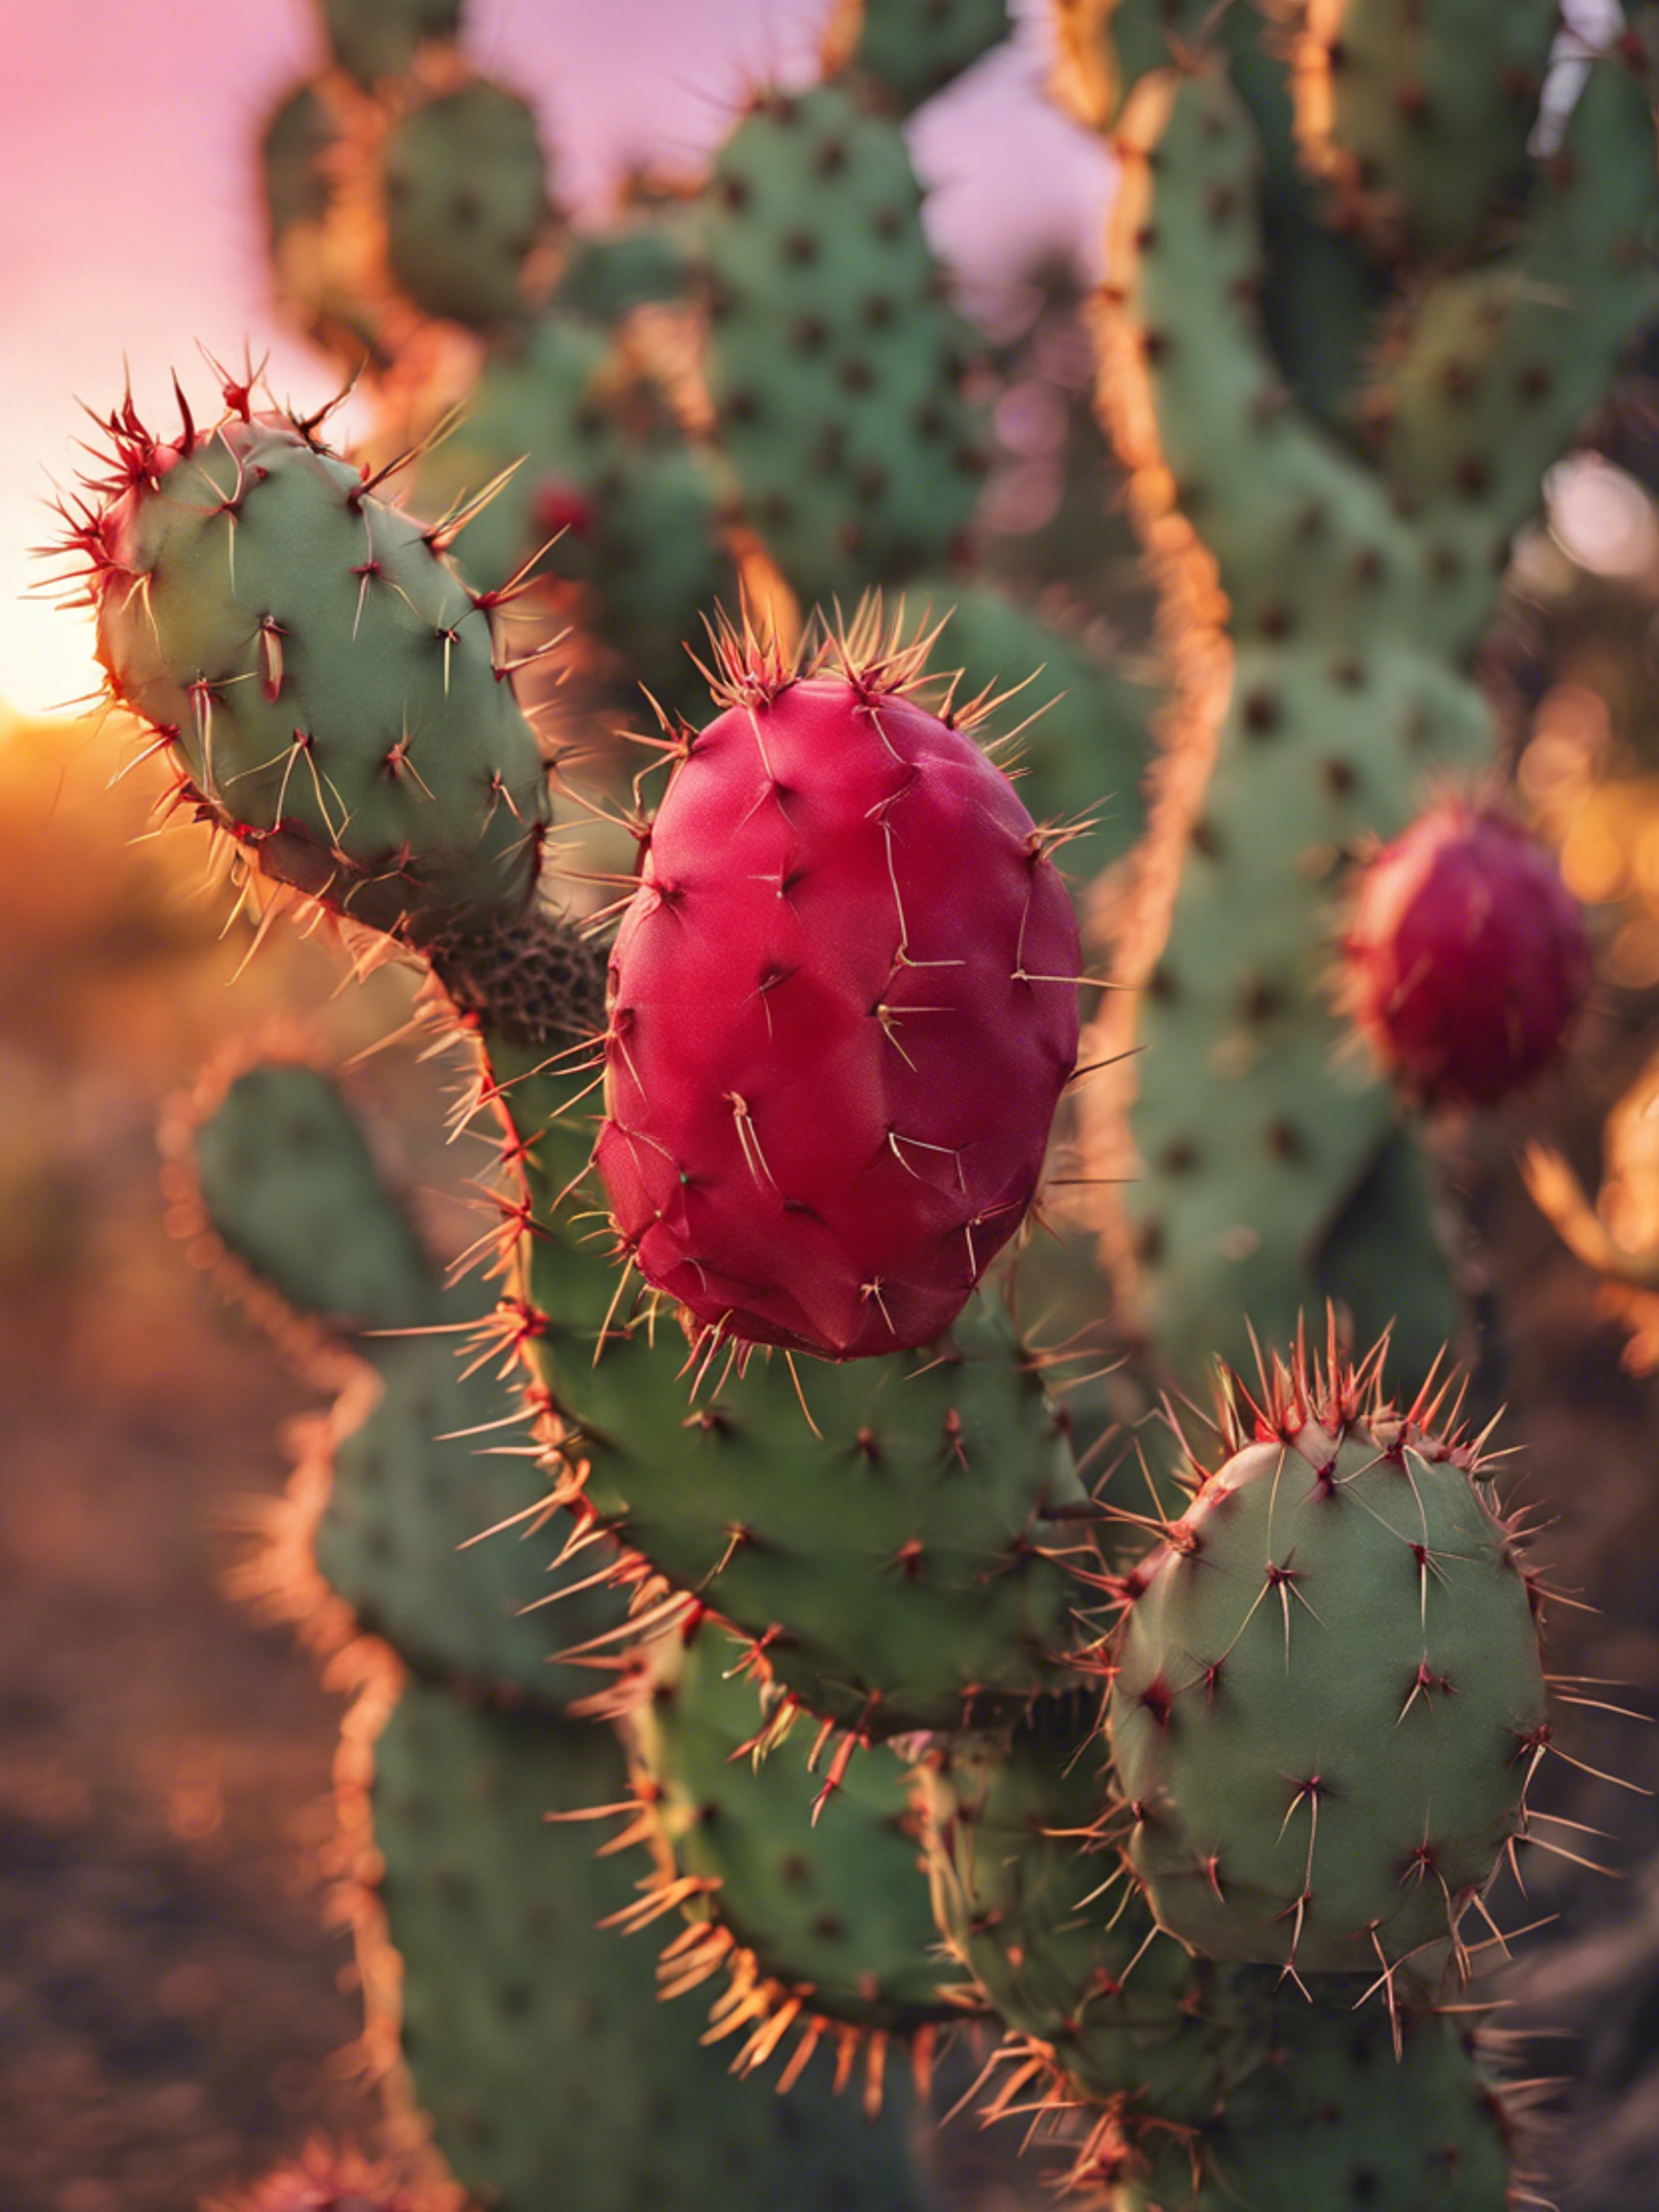 A prickly pear cactus with ripe, red fruits against a sunset background. Divar kağızı[5965817ee192450fa25b]